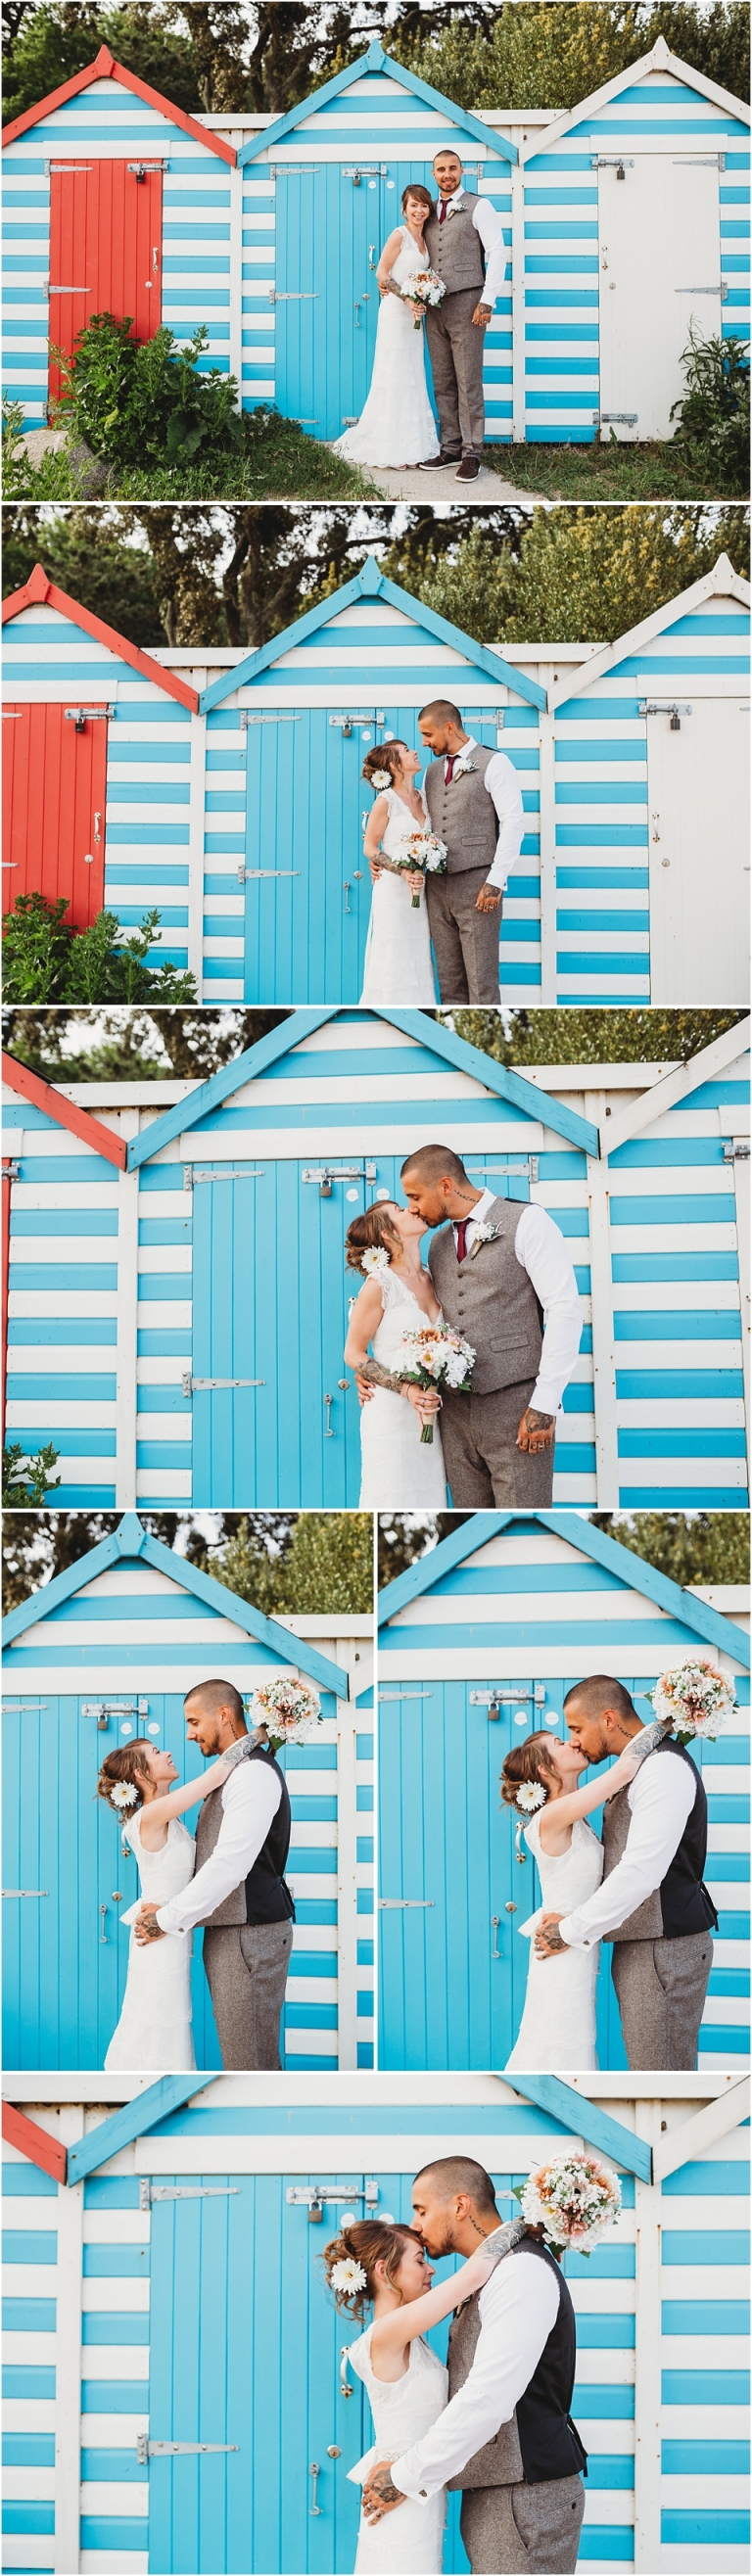 3 Wedding Reception Photography at The Flavel, Dartmouth - romantic beach hut couple portraits